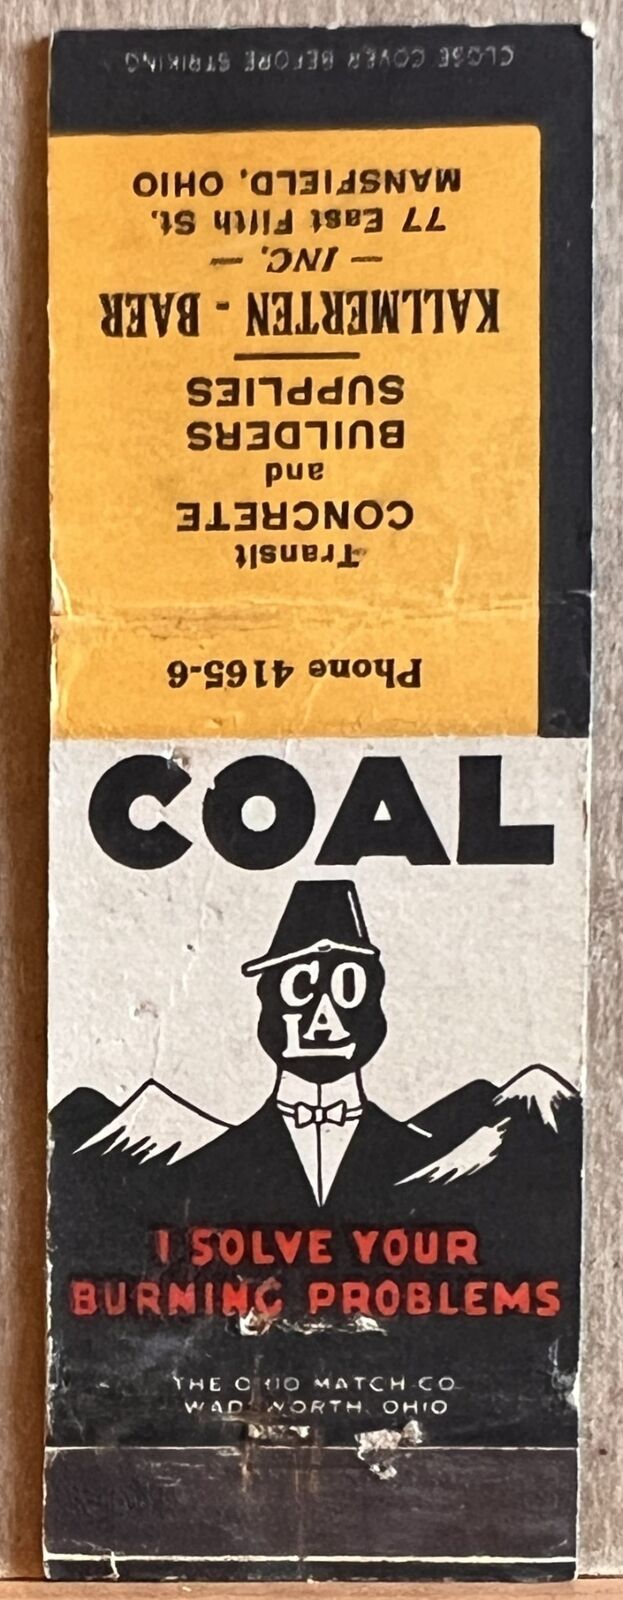 Kallmerten-Baer Mansfield OH Ohio Coal Transit Concrete Vintage Matchbook Cover